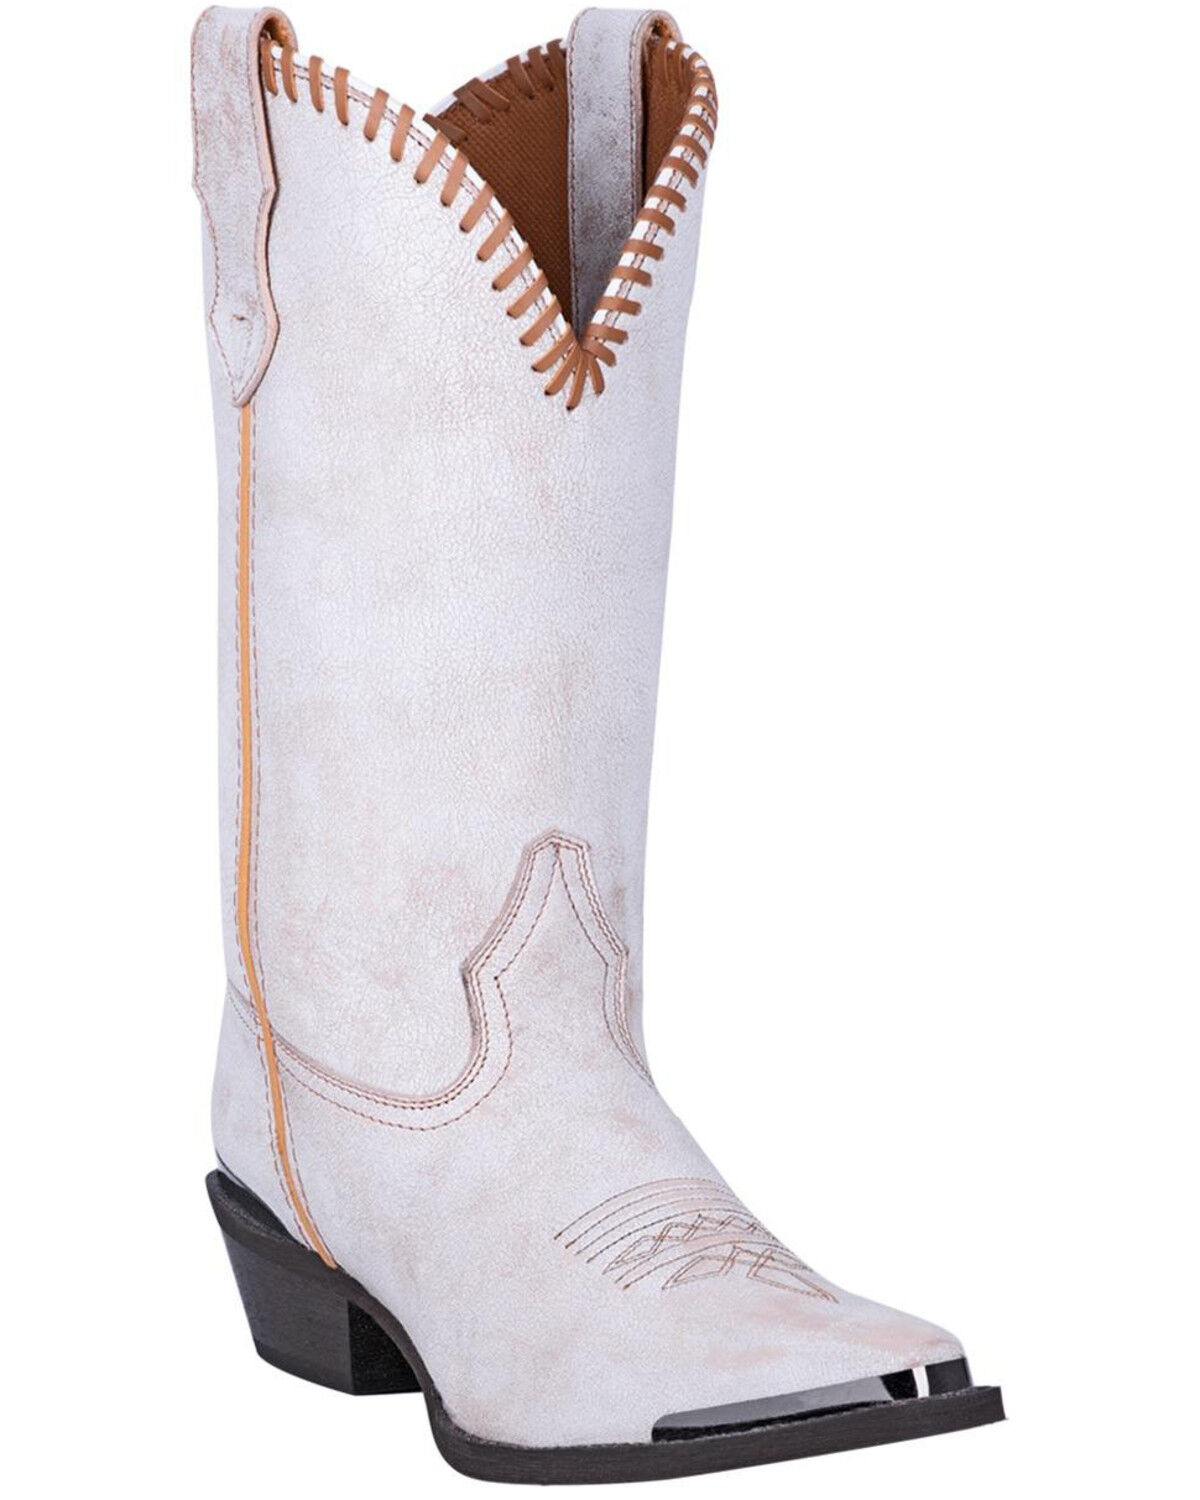 laredo women's cowboy boots